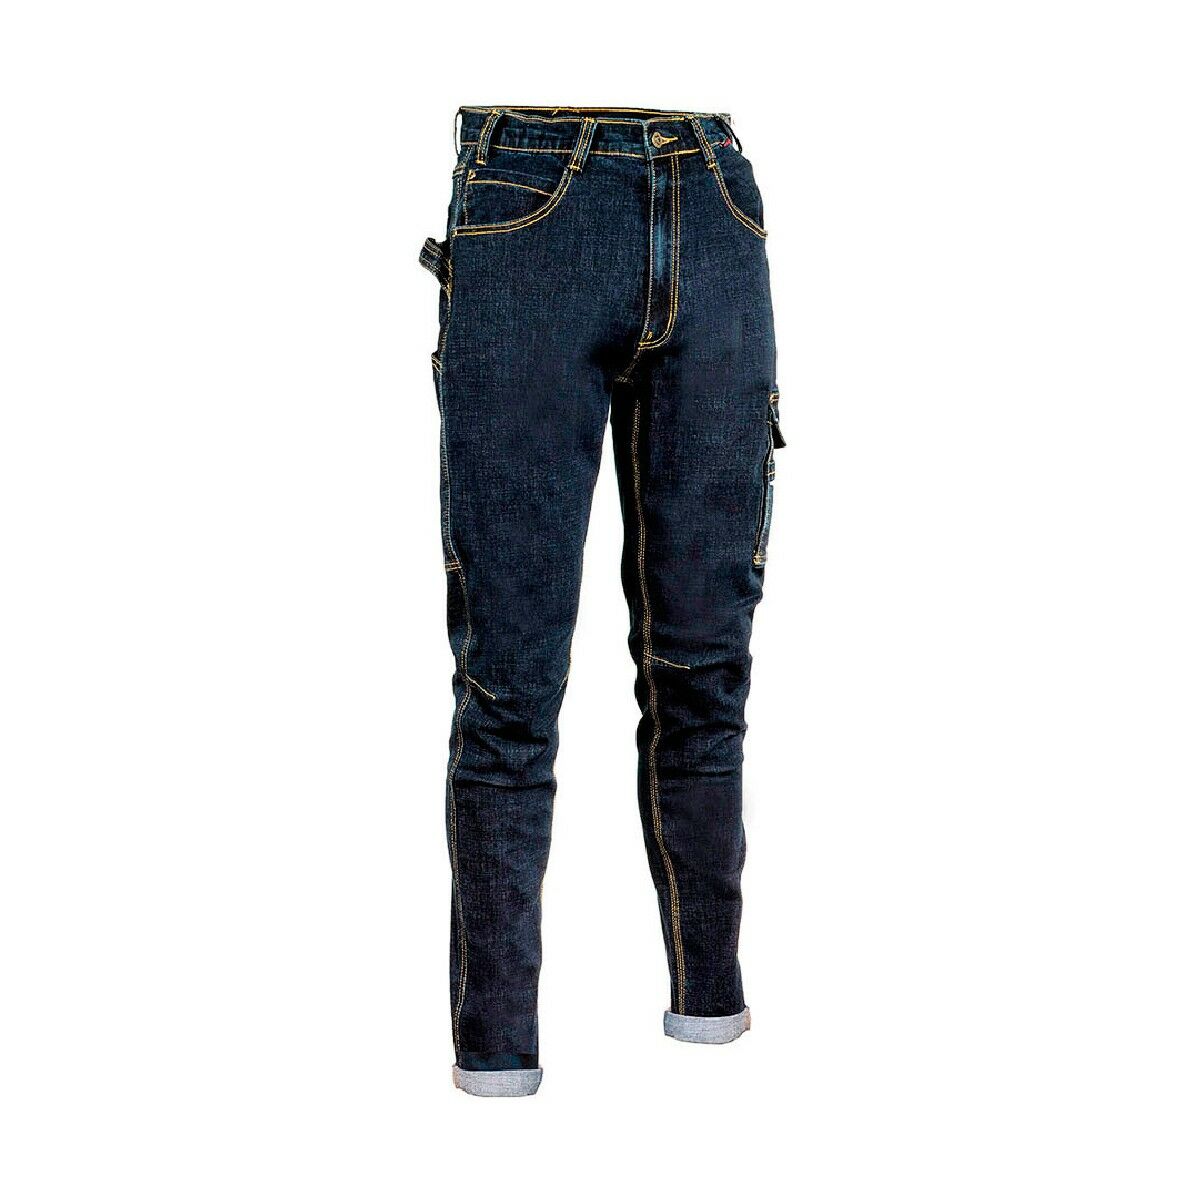 Pantaloni de siguranță Cofra Cabries Profesionist Bleumarin - Mărime 52